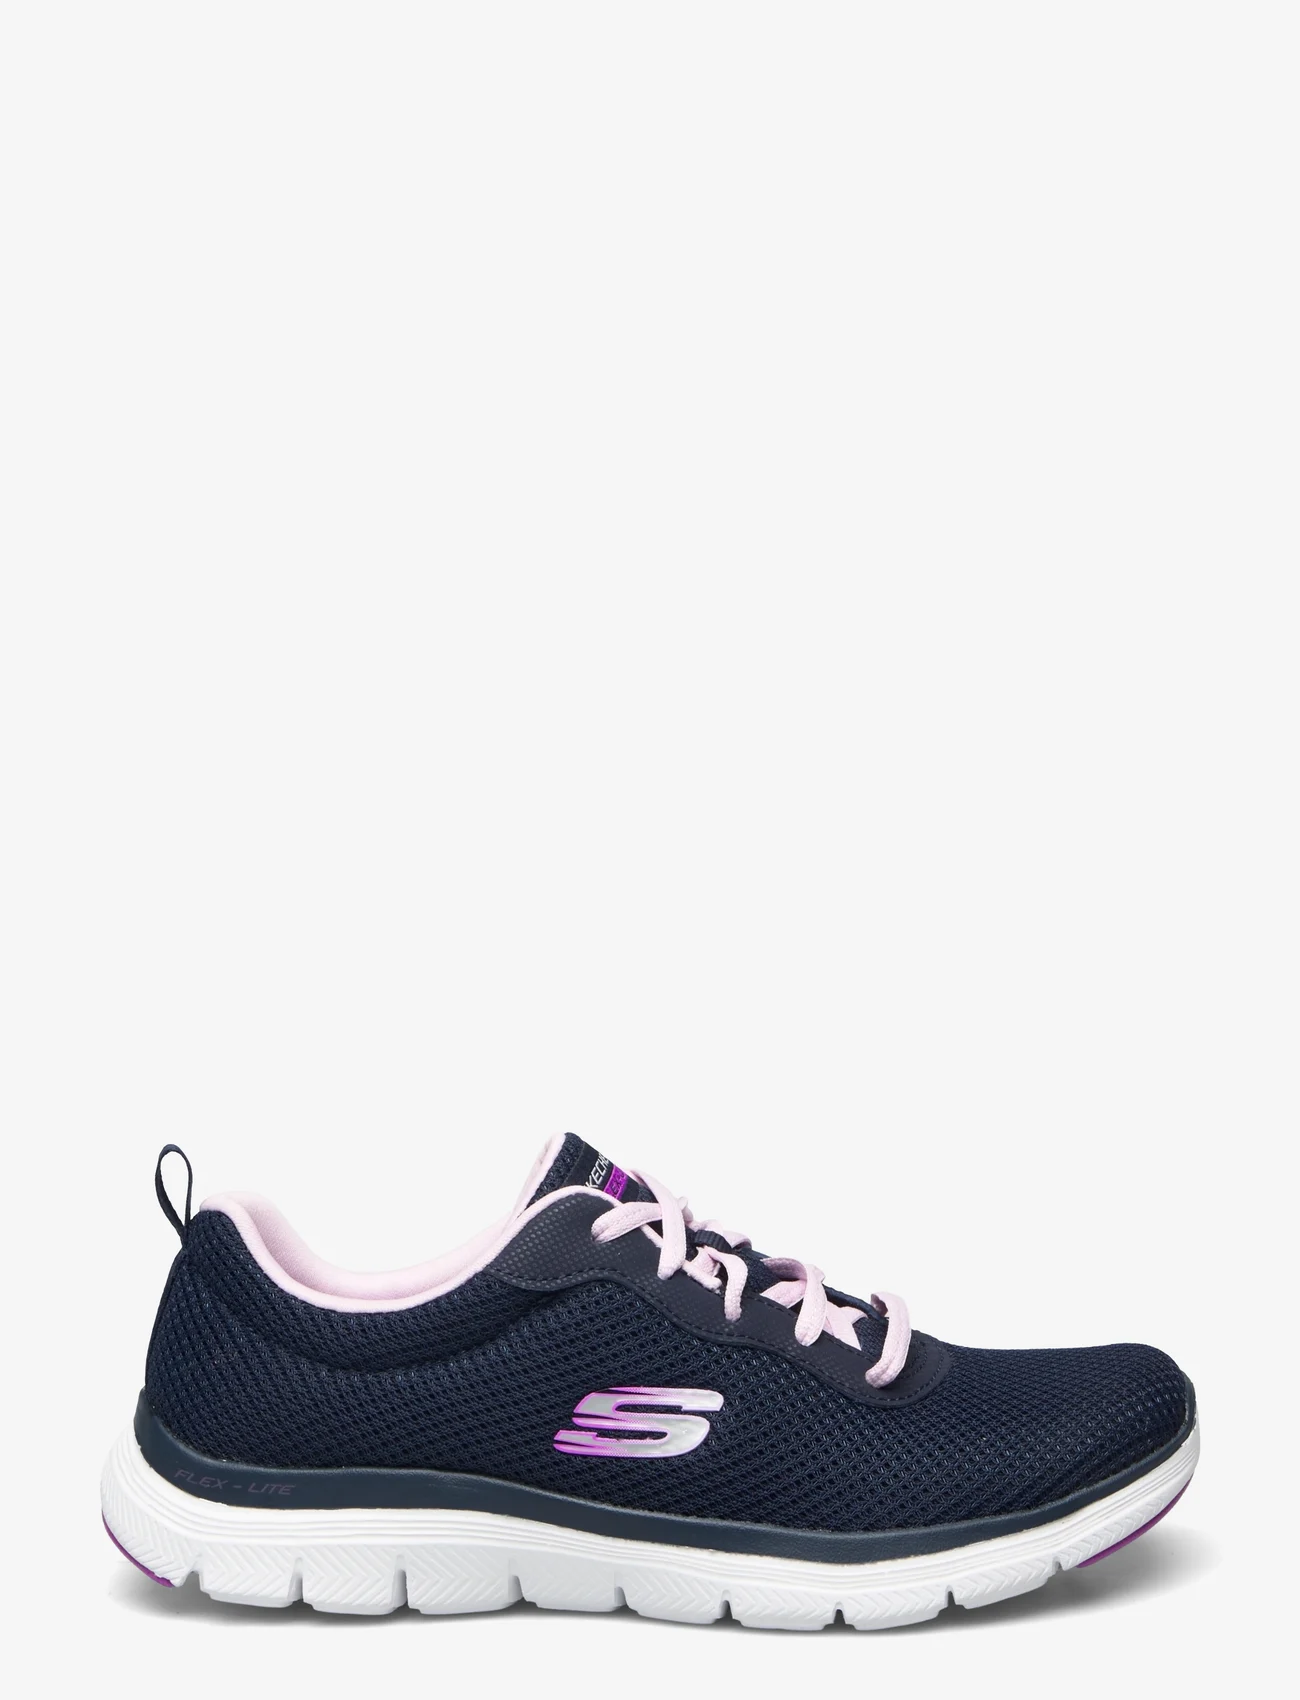 Skechers - Womens Flex Appeal 4.0 - Brilliant View - niedrige sneakers - nvlv navy lavender - 1